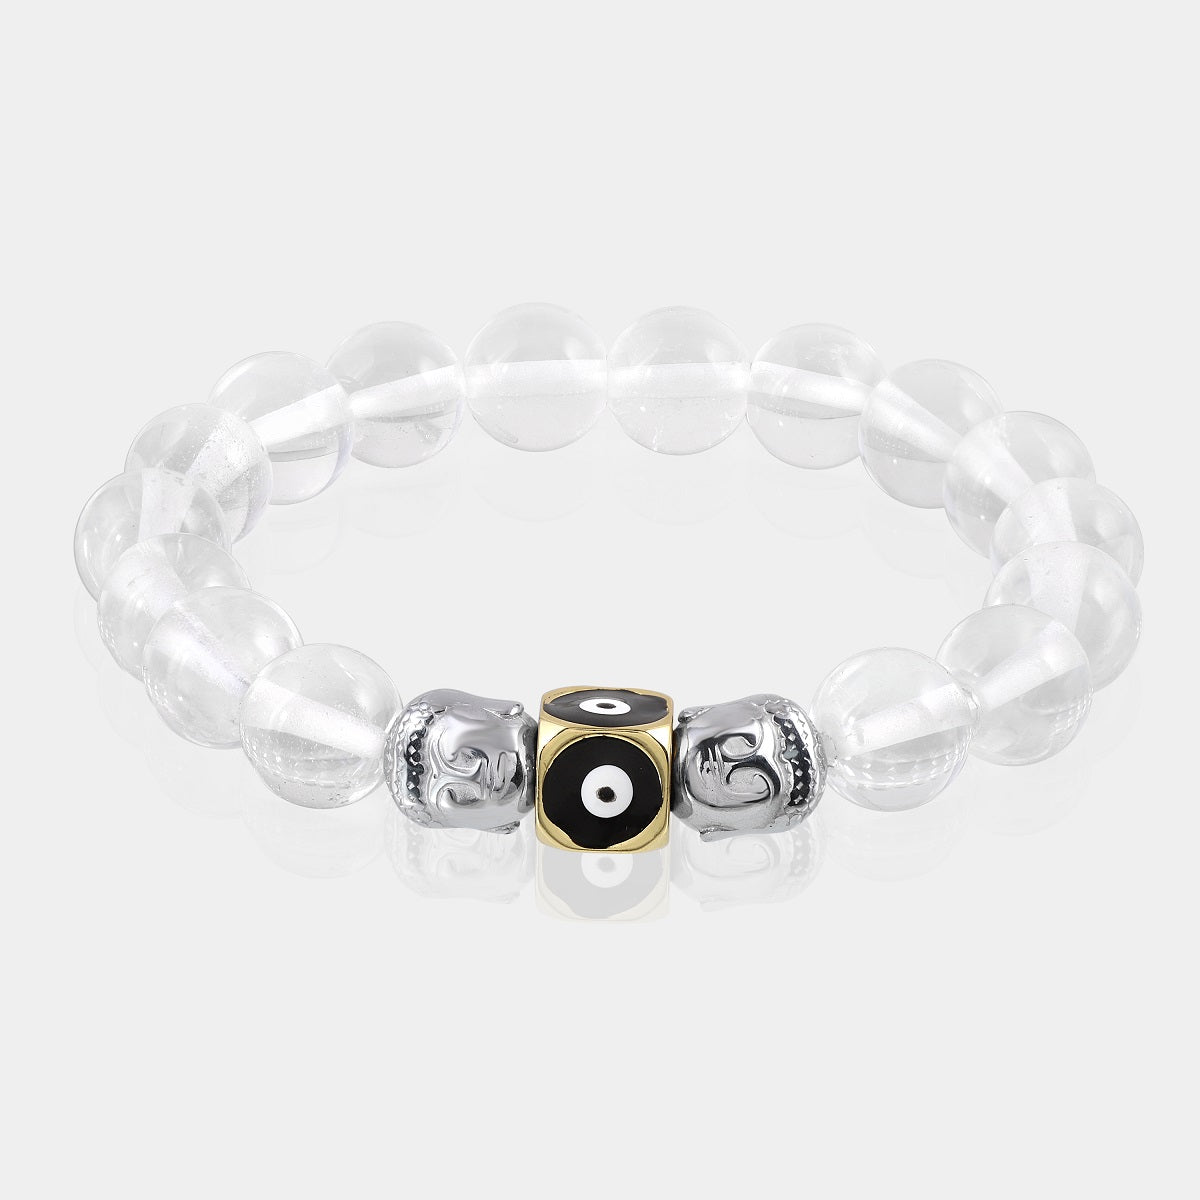 Crystal Quartz and Hematite Buddha Face Beads Bracelet